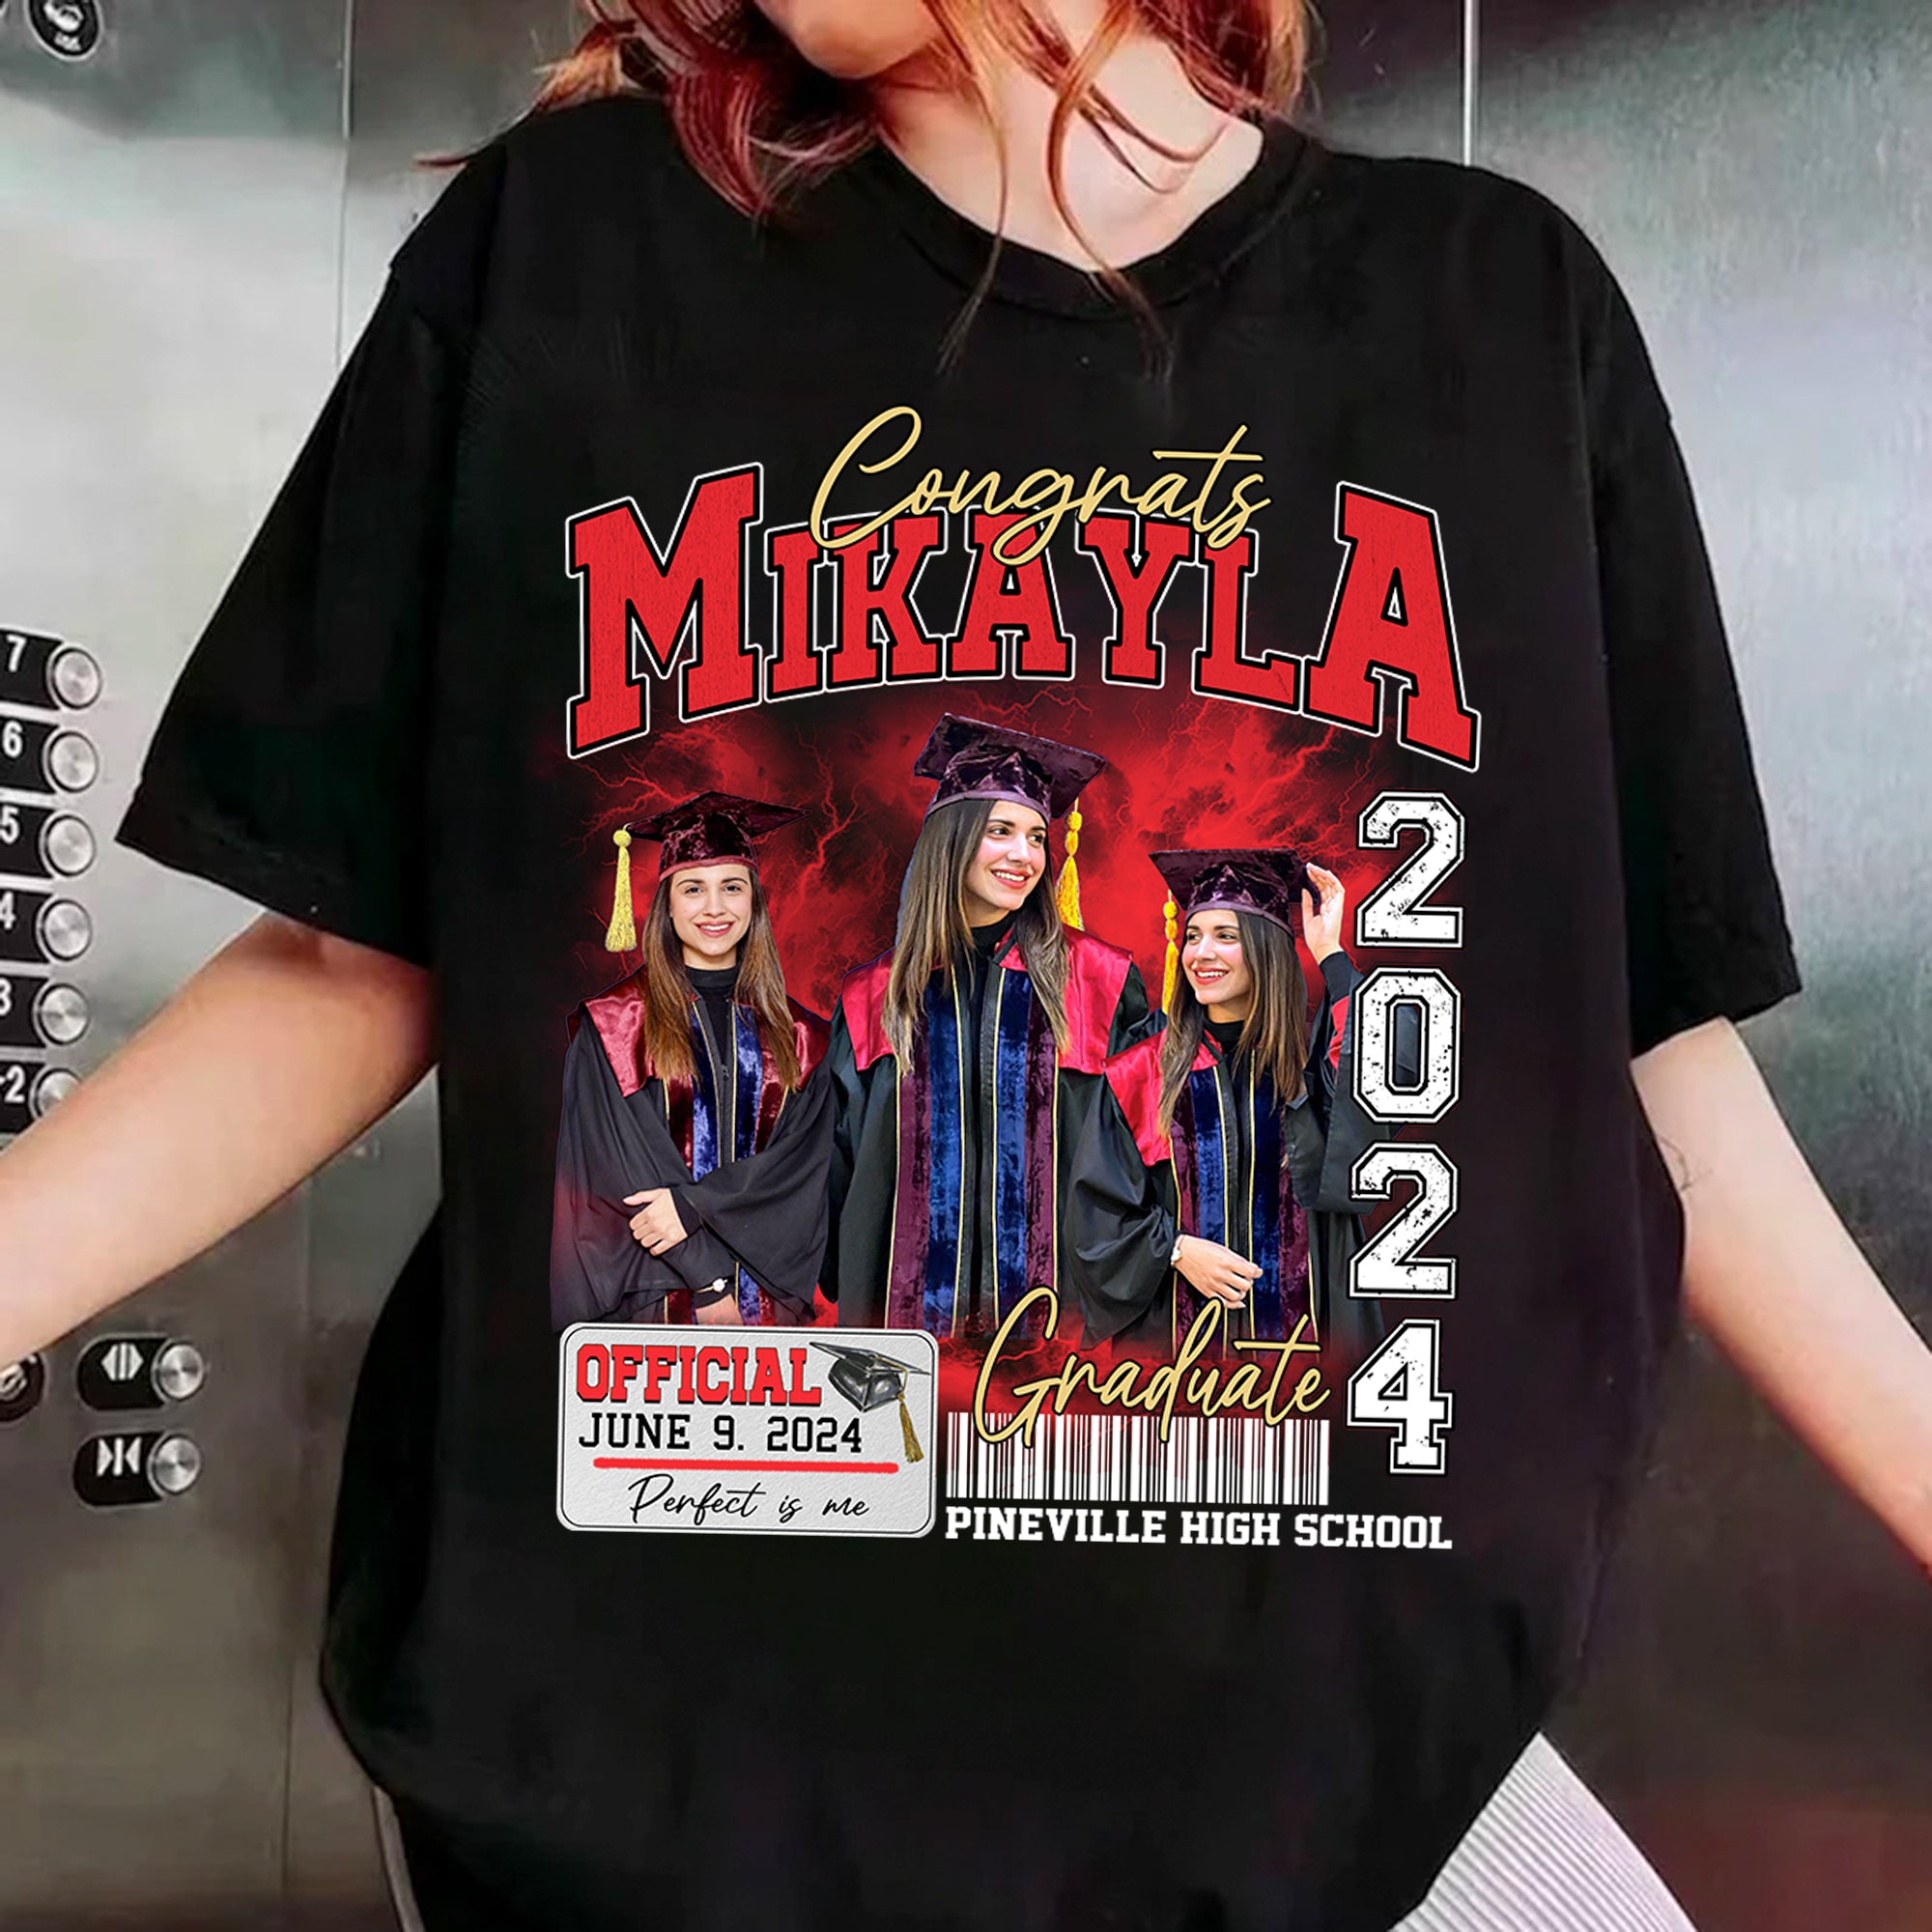 Congratulation Graduation Bootleg Shirt - Custom Photo Graduation Bootleg Shirt